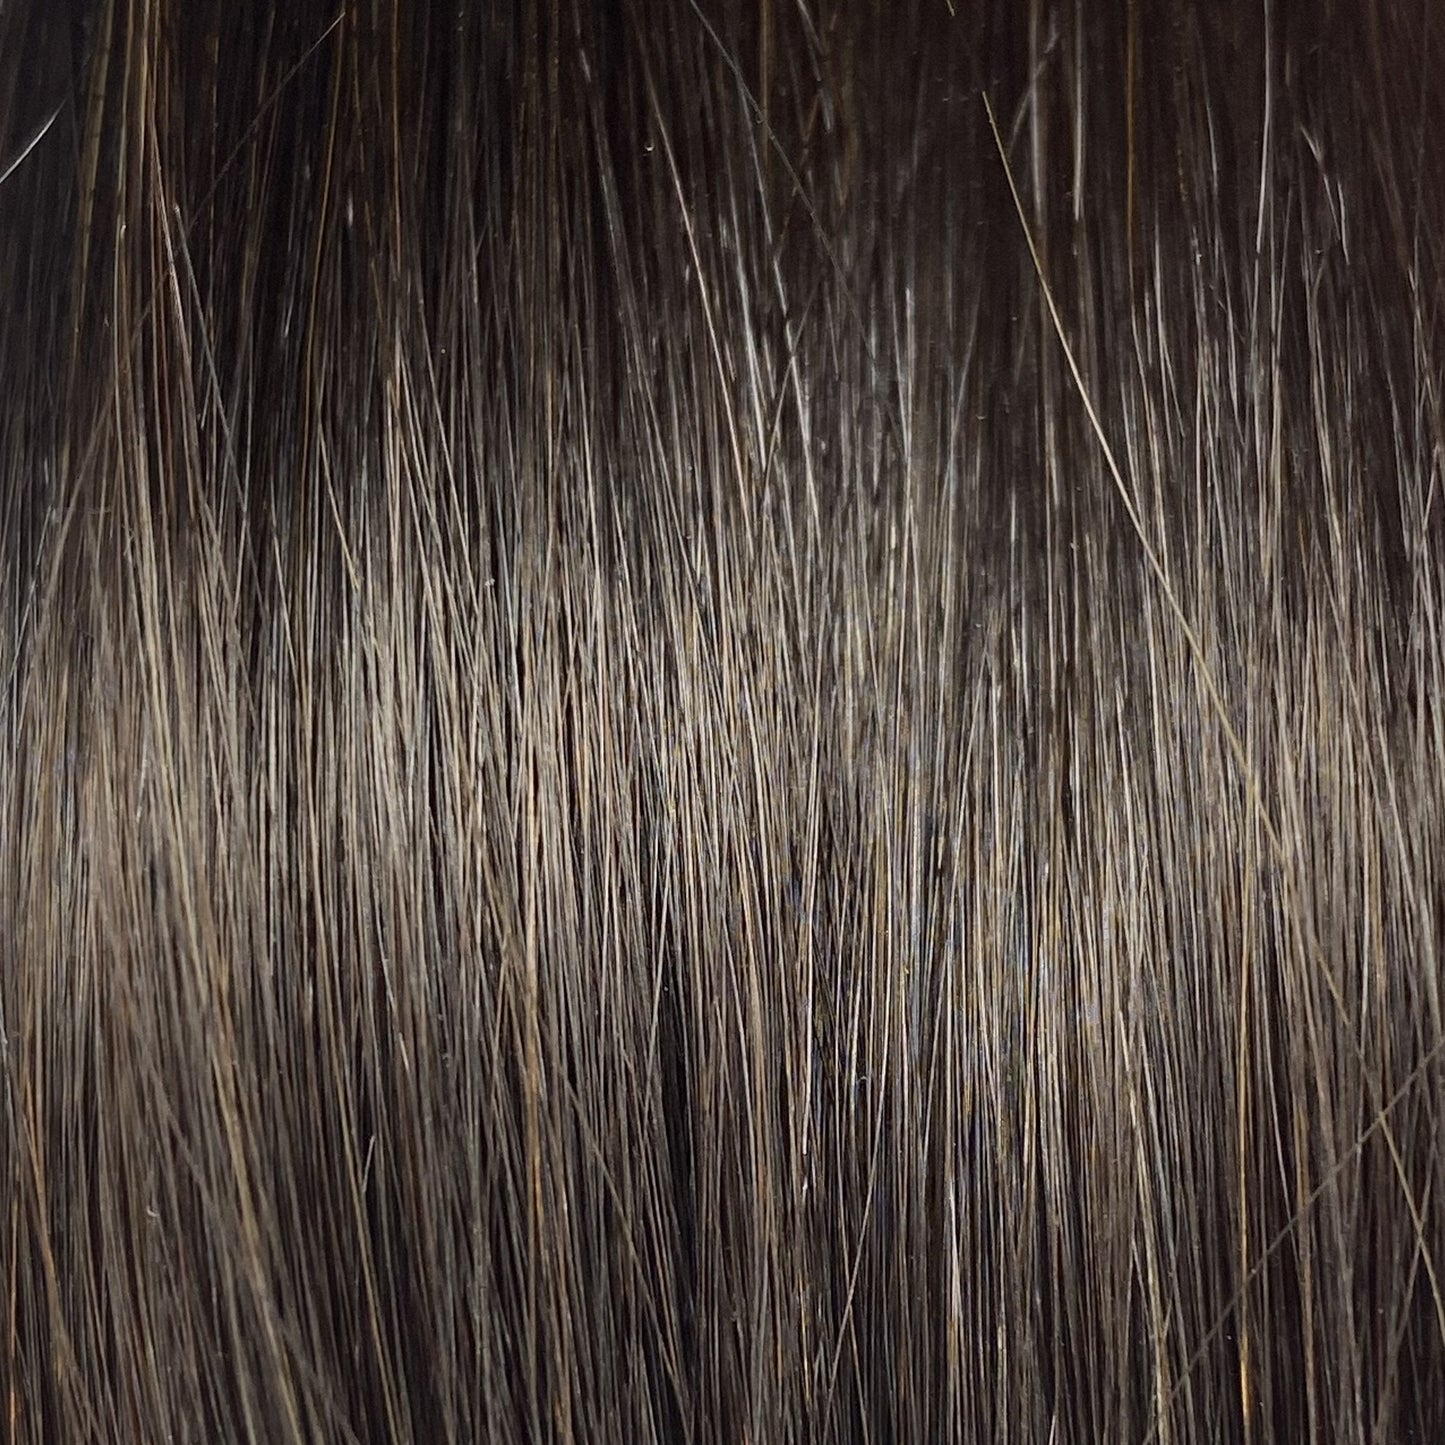 Fusion hair extensions #2 - 50cm/20 inches - Dark Chestnut Fusion Euro So Cap 